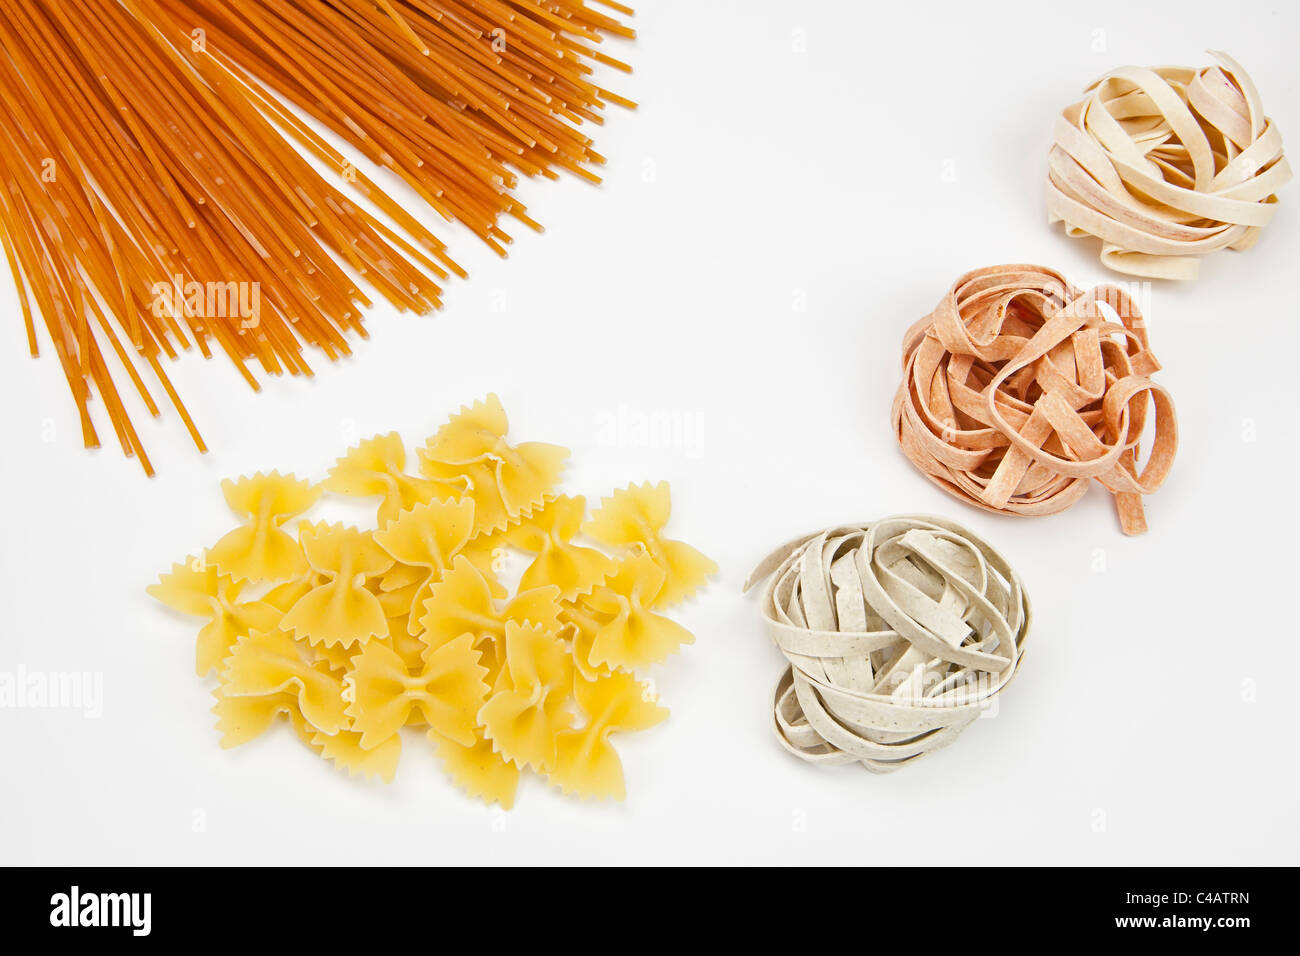 three different kinds of pasta - spaghetti, farfalle, tagliatelle Stock Photo